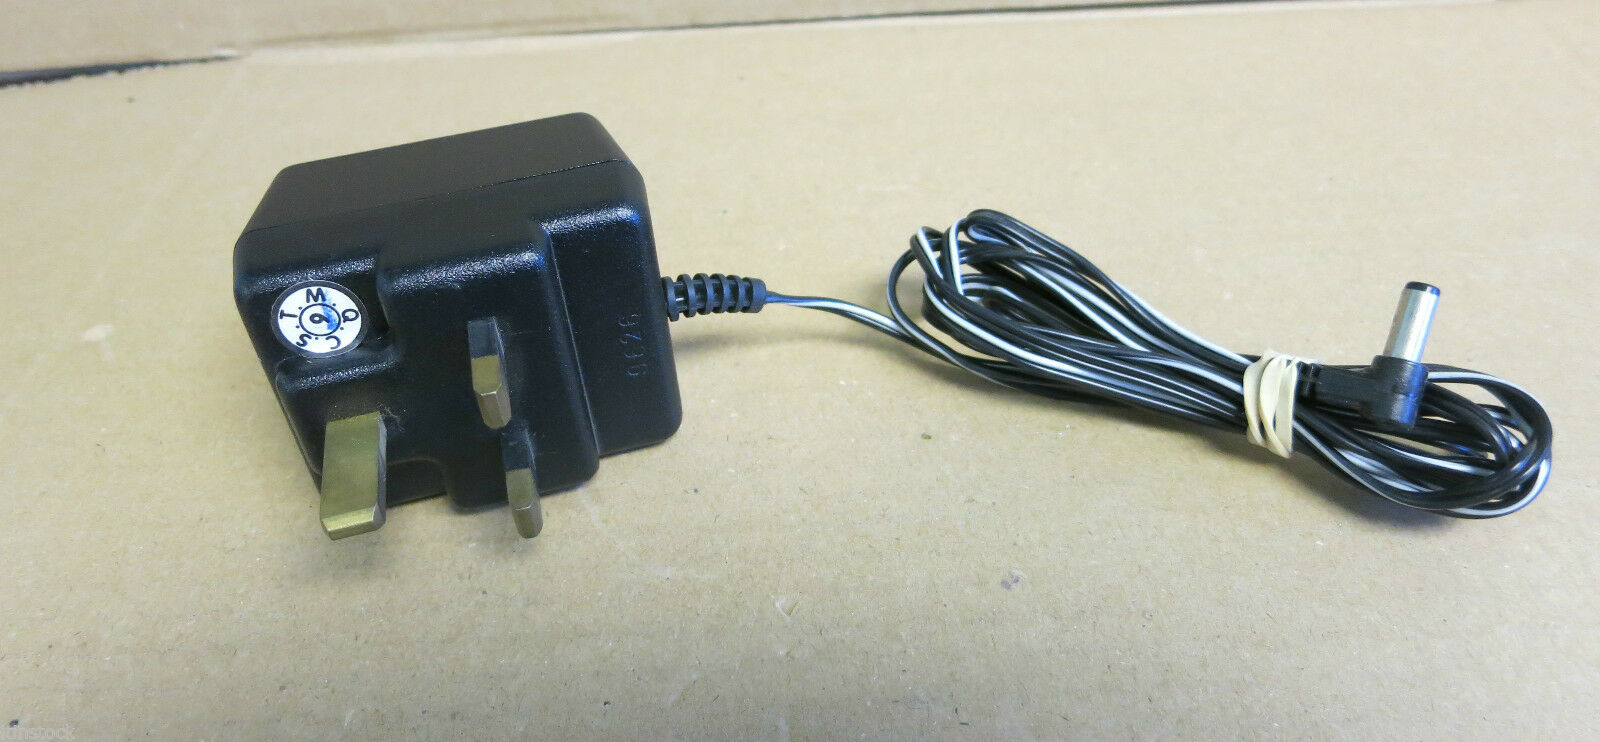 Phone Mate AC Power Adapter 9V 450mA 9W UK 3 Pin Plug - Model: SB41-206BS Type: AC Power Adapter MPN: SB41-206BS Bra - Click Image to Close